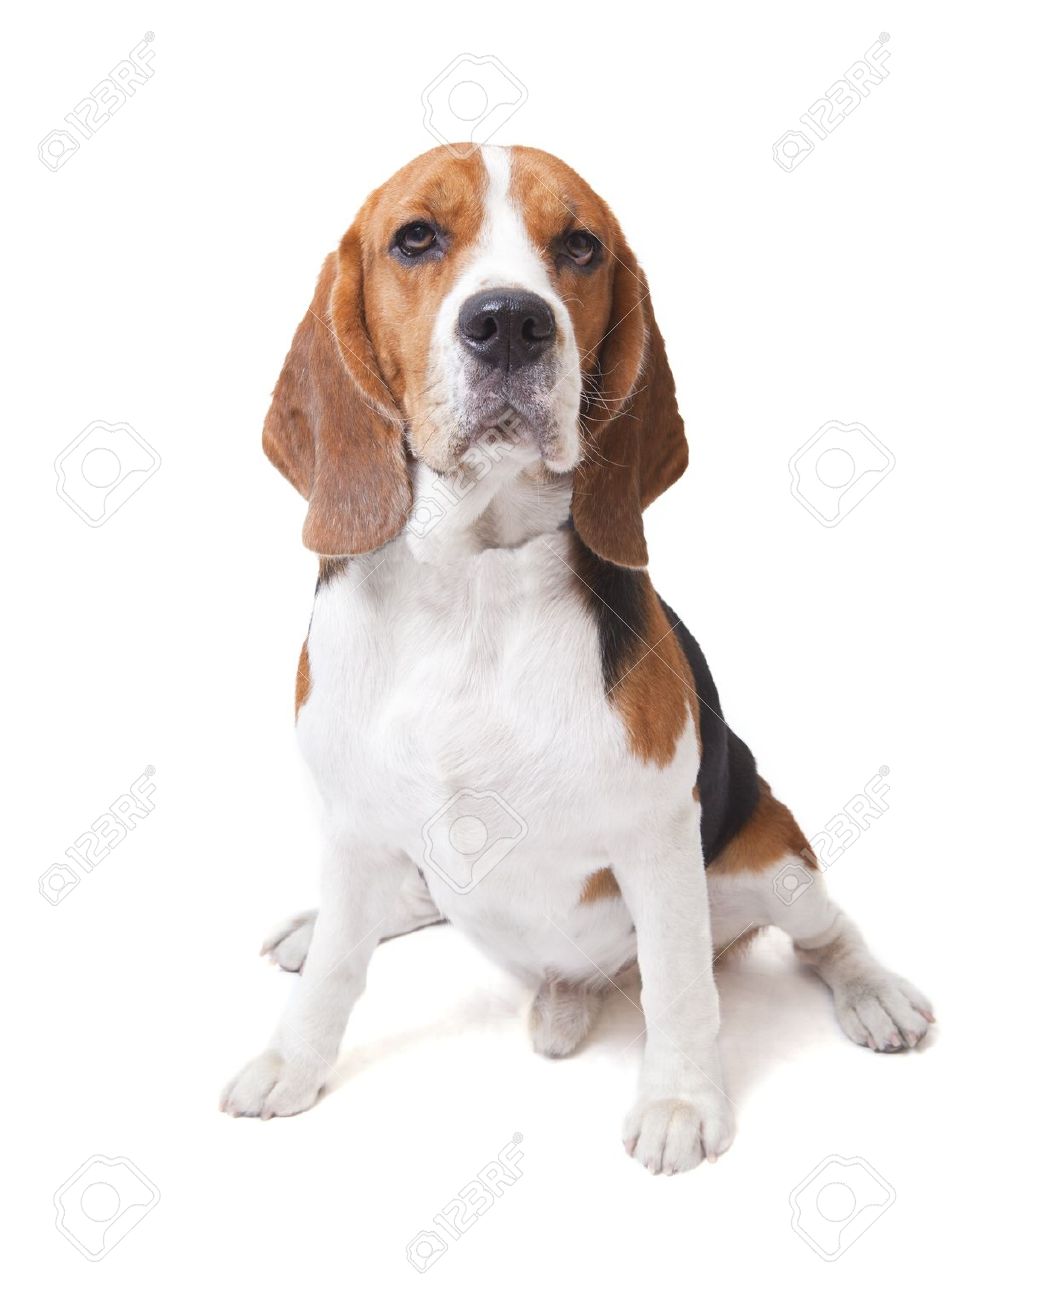 Male Beagle Dog Sitting